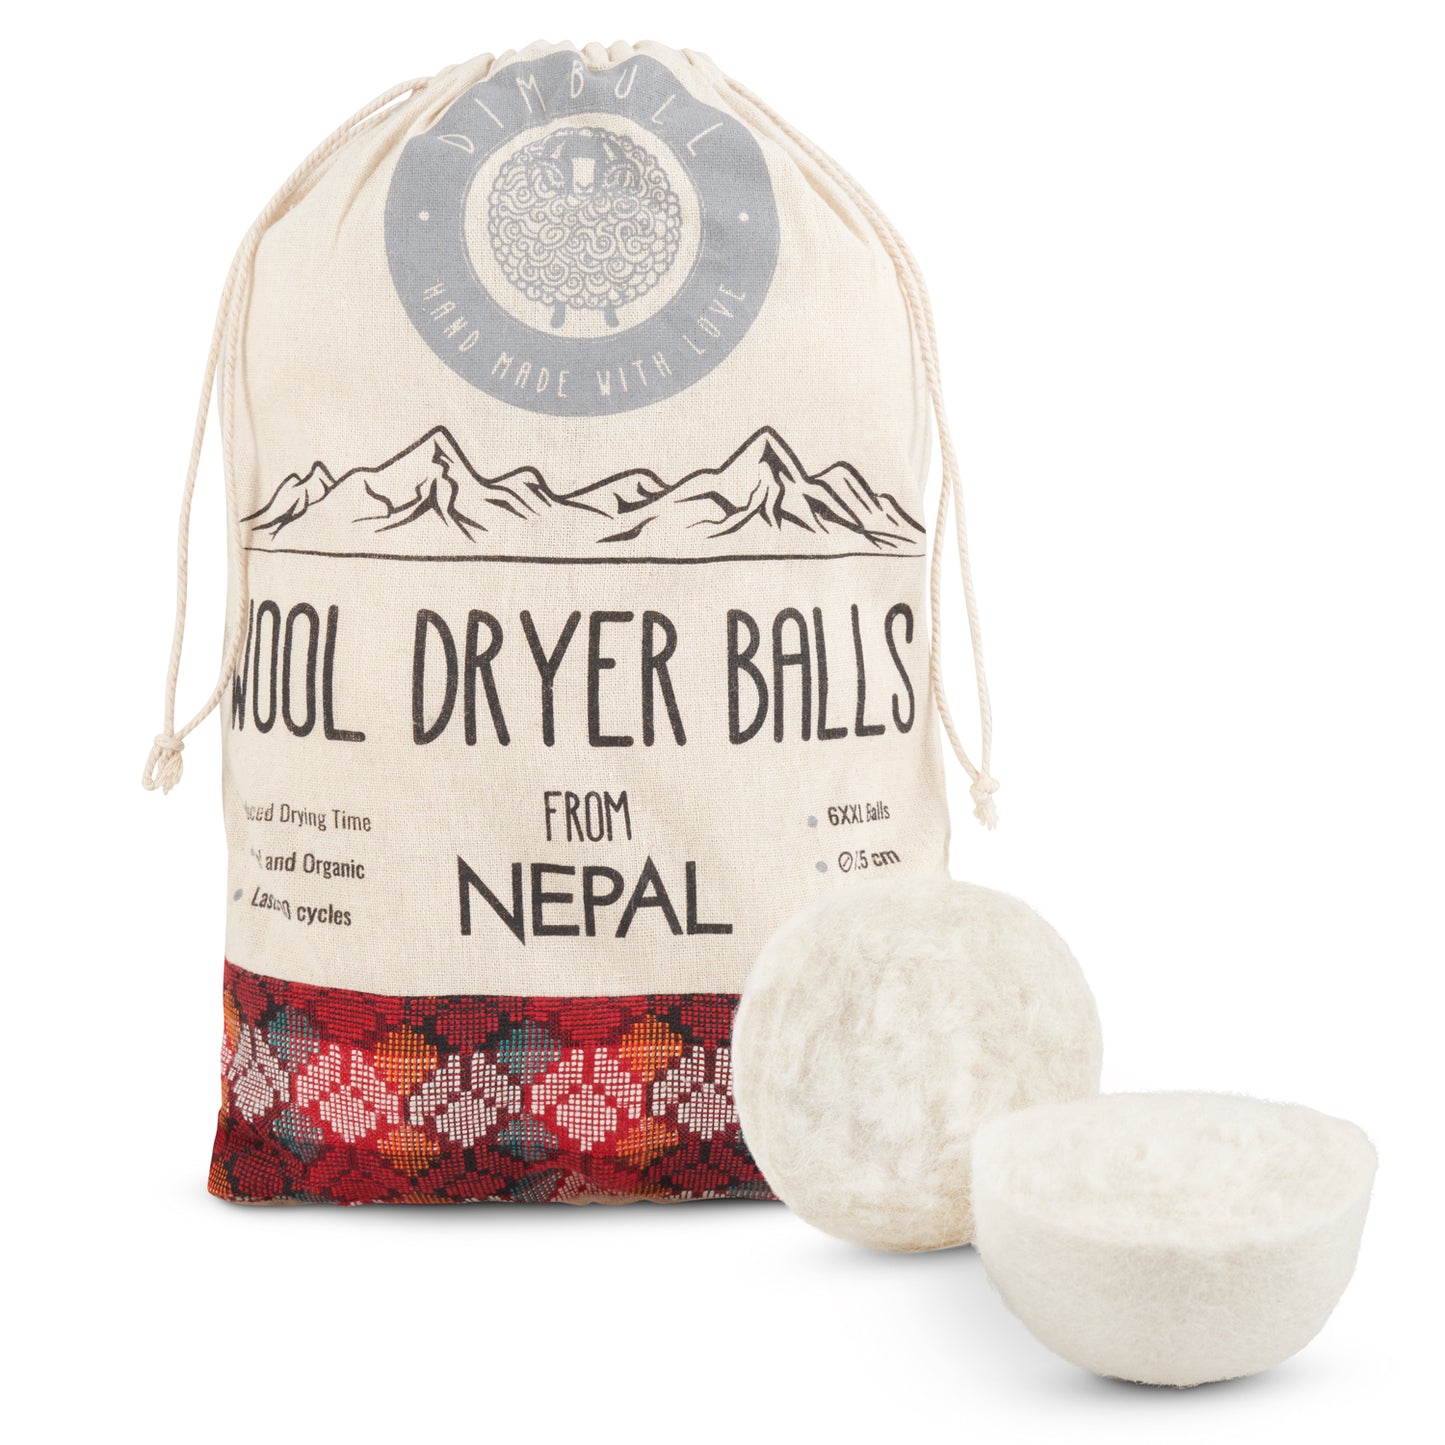 Wool Dryer Balls from Nepal